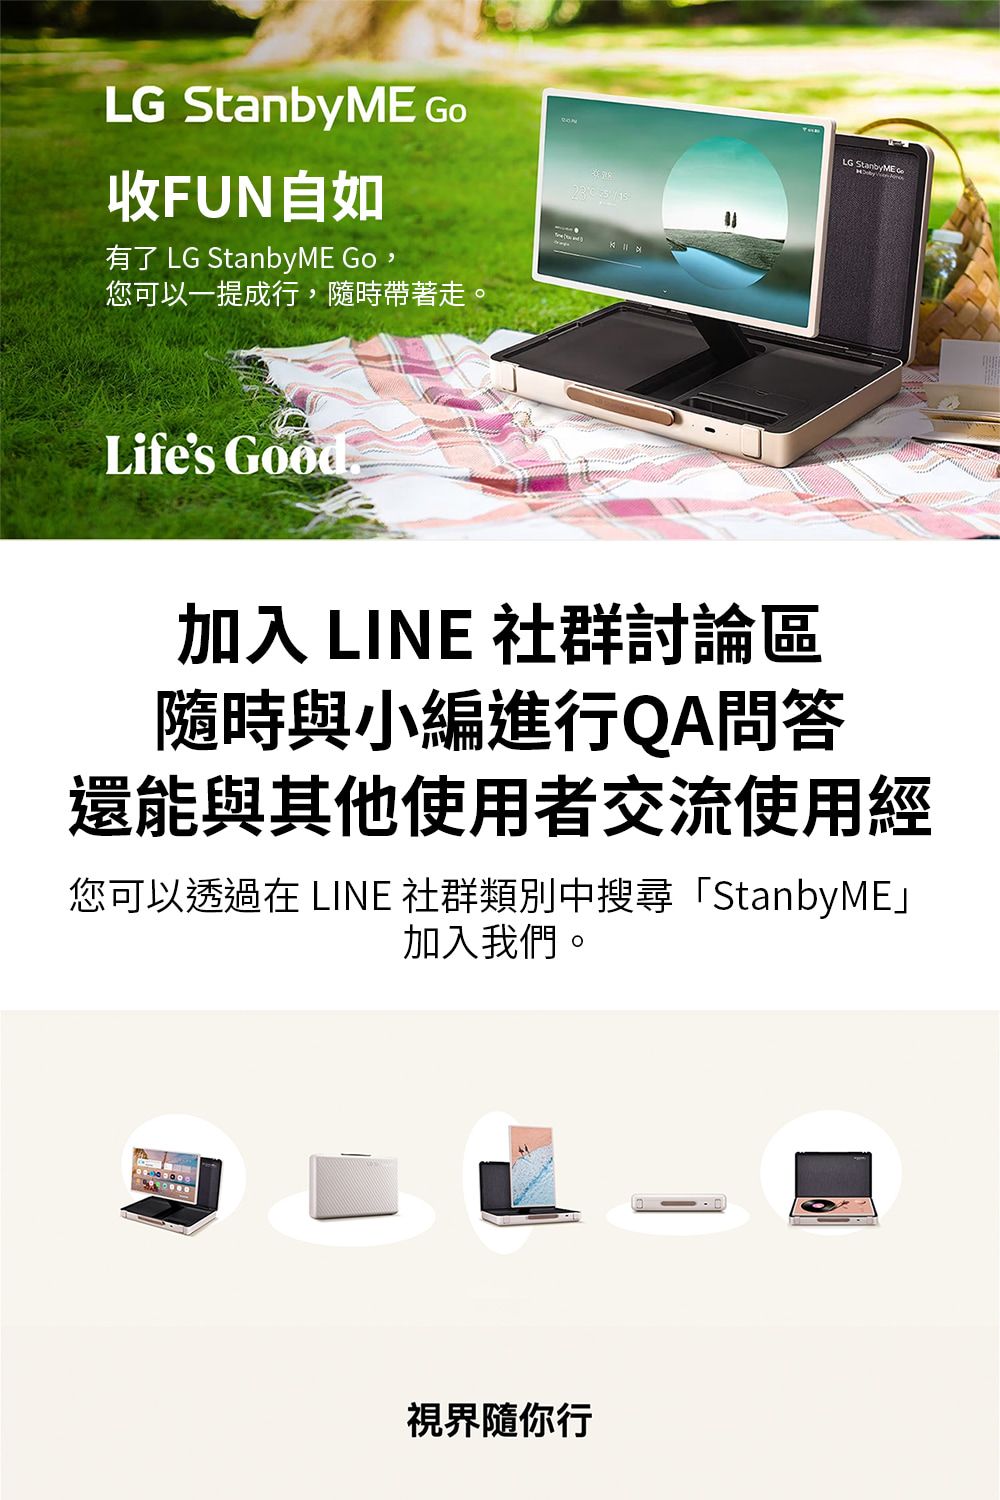 LG StanbyME 收FUN自如有了 LG StanbyME Go,您可以一提成行,隨時帶著走。Life's Good.LG 加入 LINE 社群討論區隨時與小編進行QA問答還能與其他使用者交流使用經您可以透過在 LINE 社群類別中搜尋「StanbyME加入我們。視界隨你行